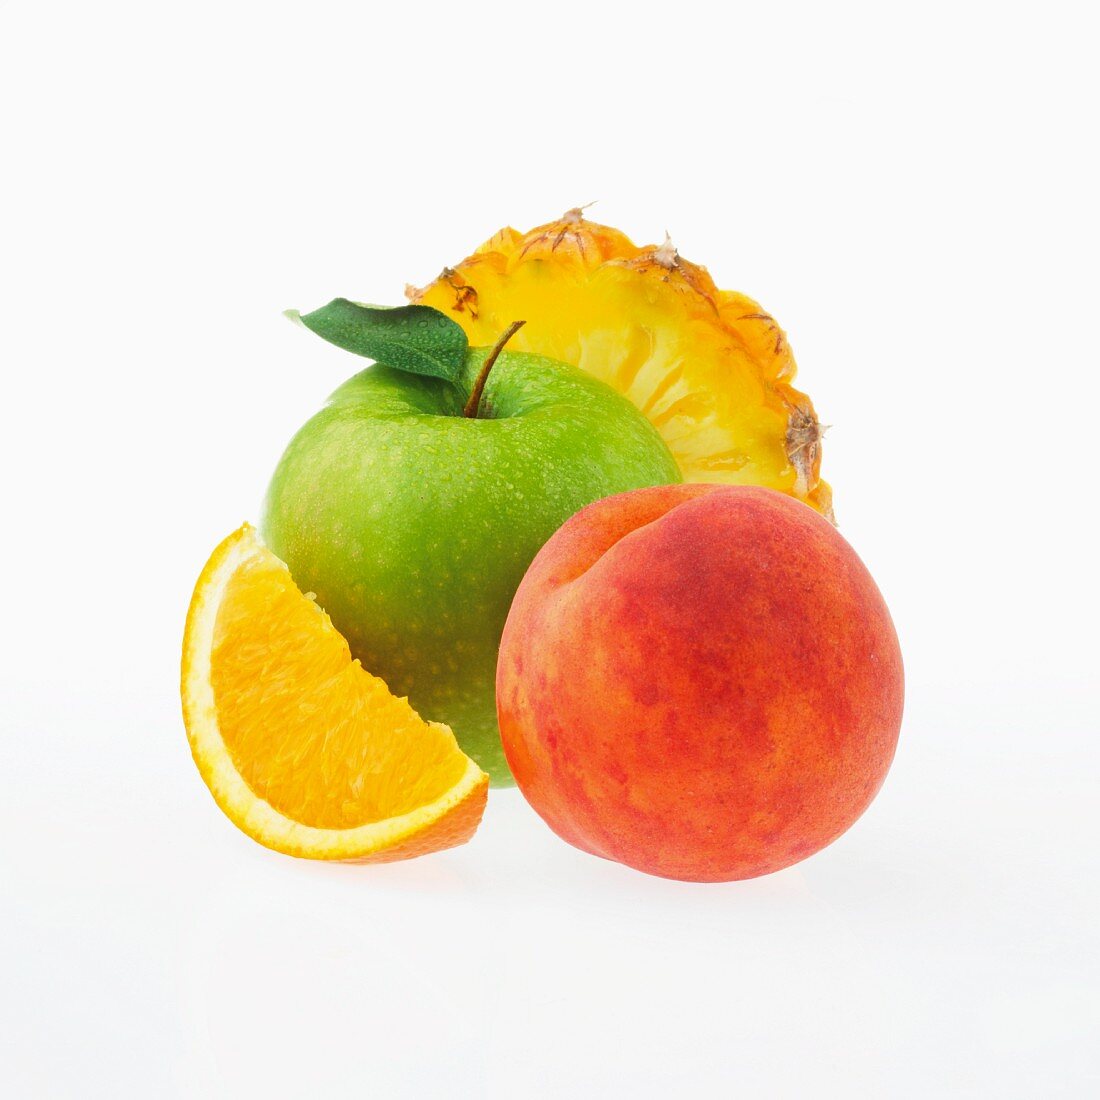 Apple, peach, orange and pineapple